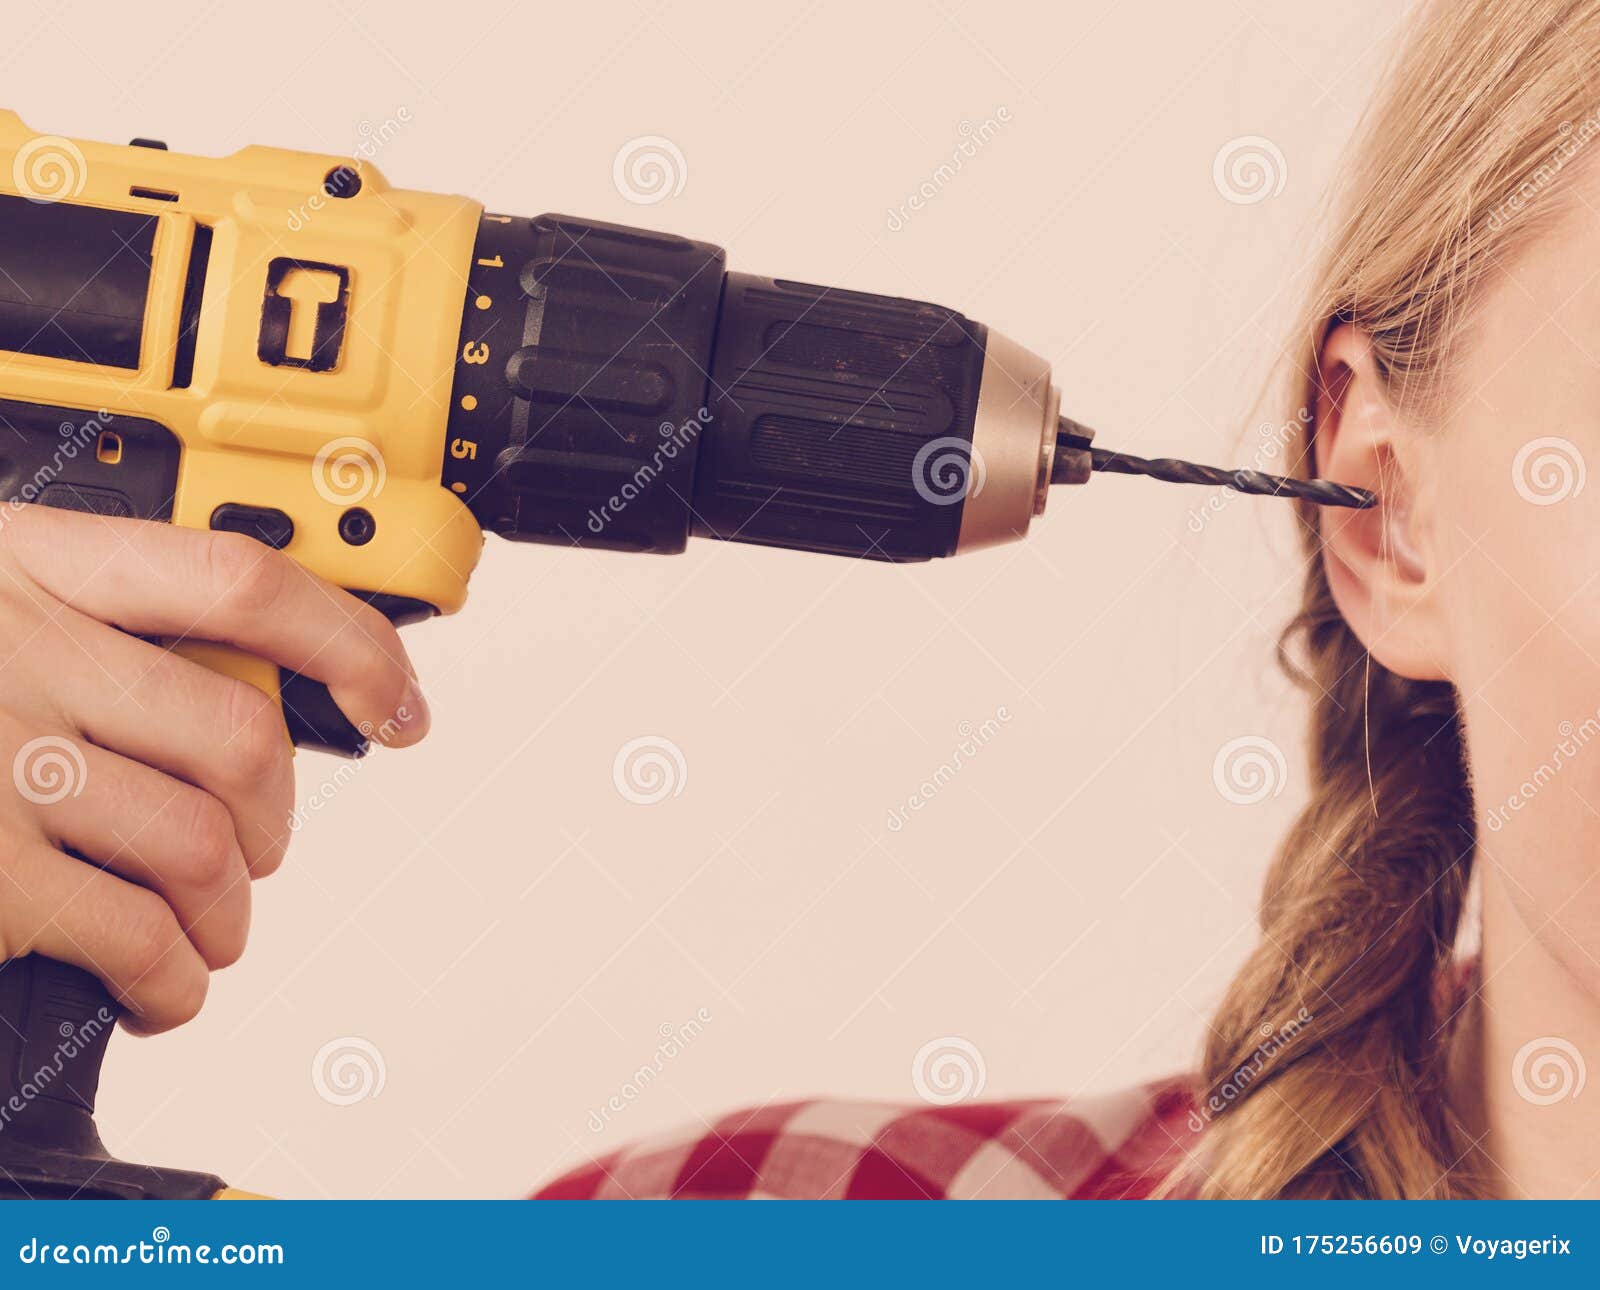 woman-pointing-her-head-drill-ear-using-female-having-problem-health-175256609.jpg